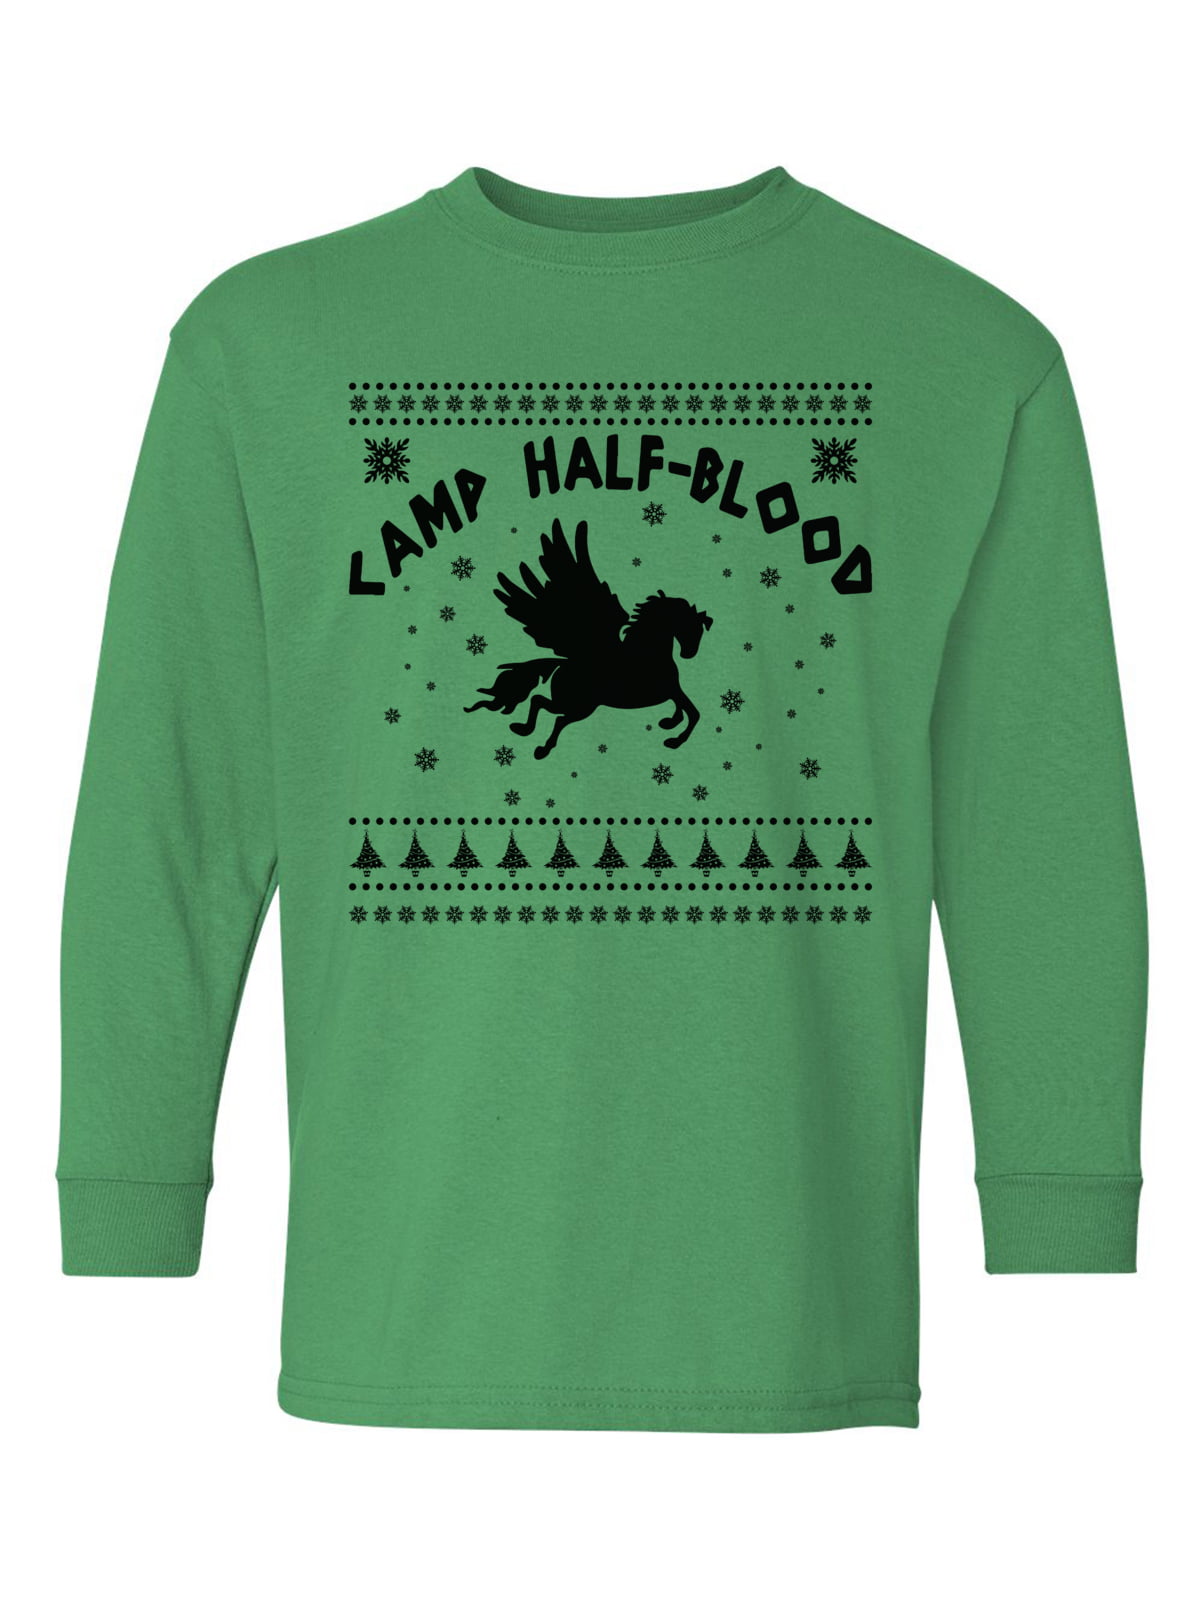 Ugly Christmas Long Sleeve Shirt for Kids Youth Boys Girls Xmas Camp Half Blood Shirt